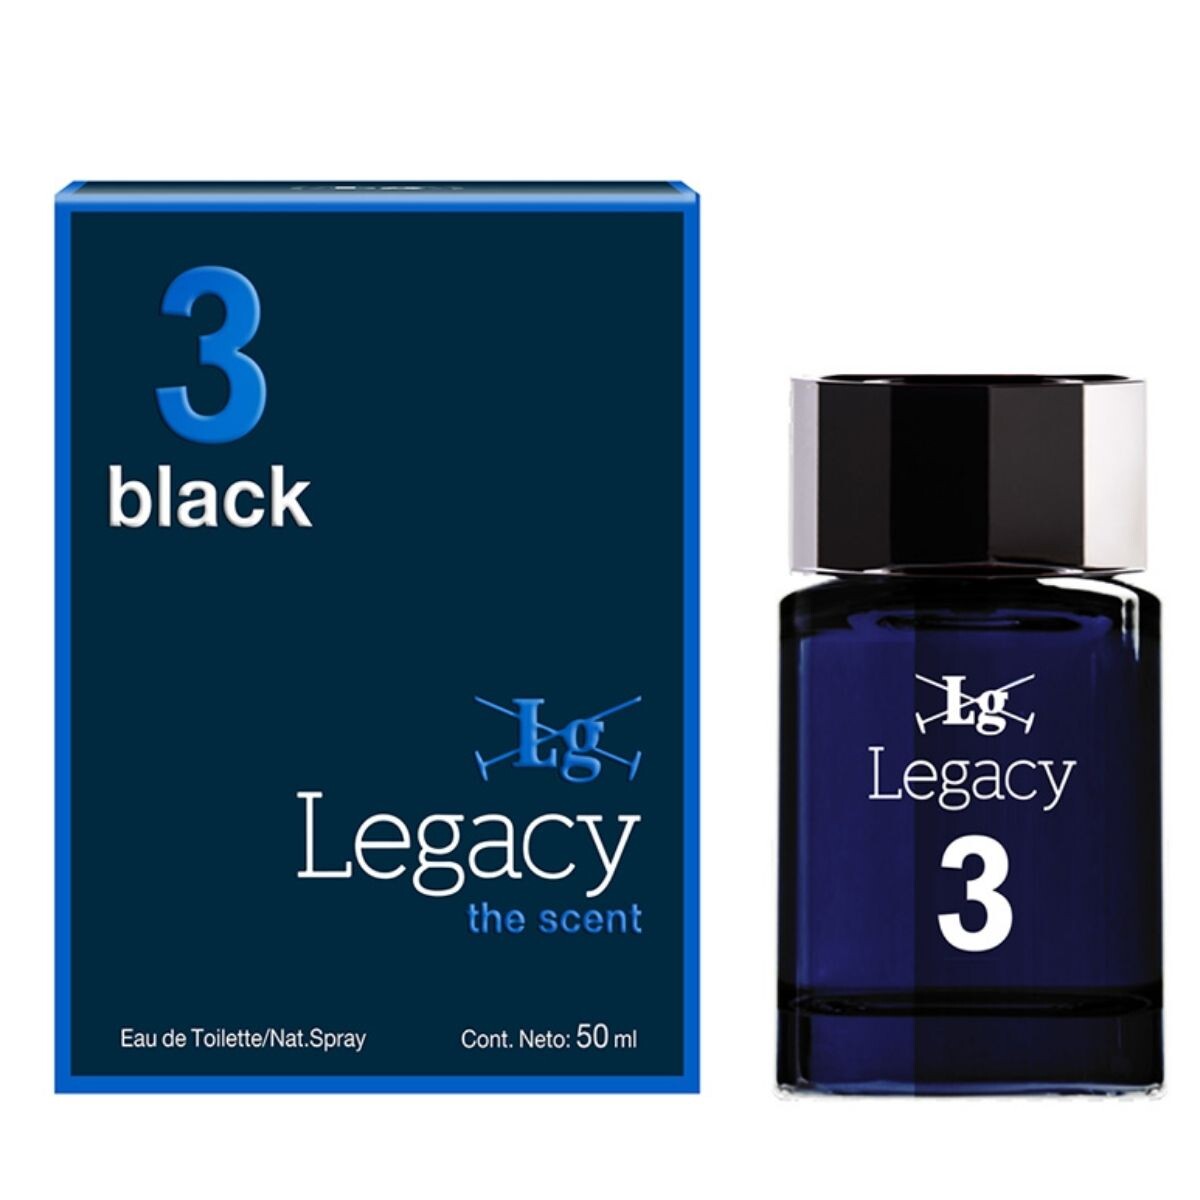 Perfume Legacy Black Eau de Toilette Nat. Spray 50 ML 